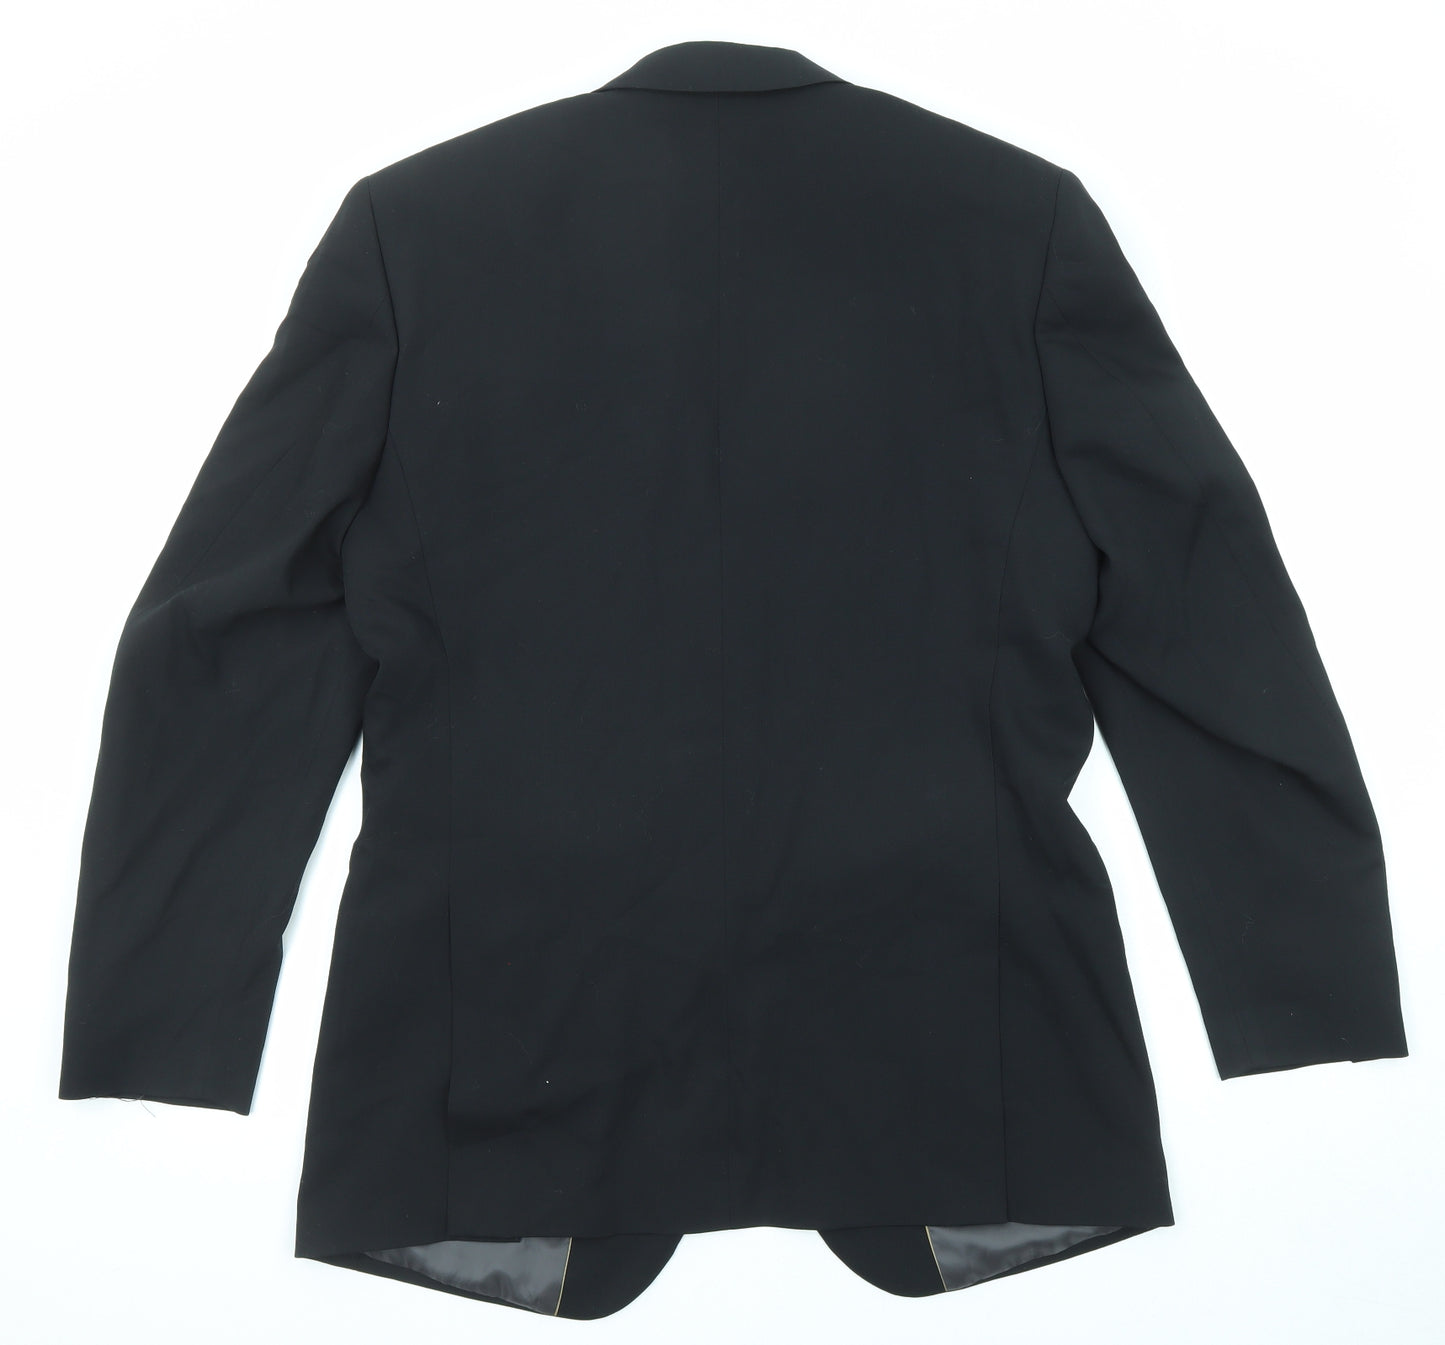 Antich Collection Mens Black Wool Jacket Suit Jacket Size 38 Regular